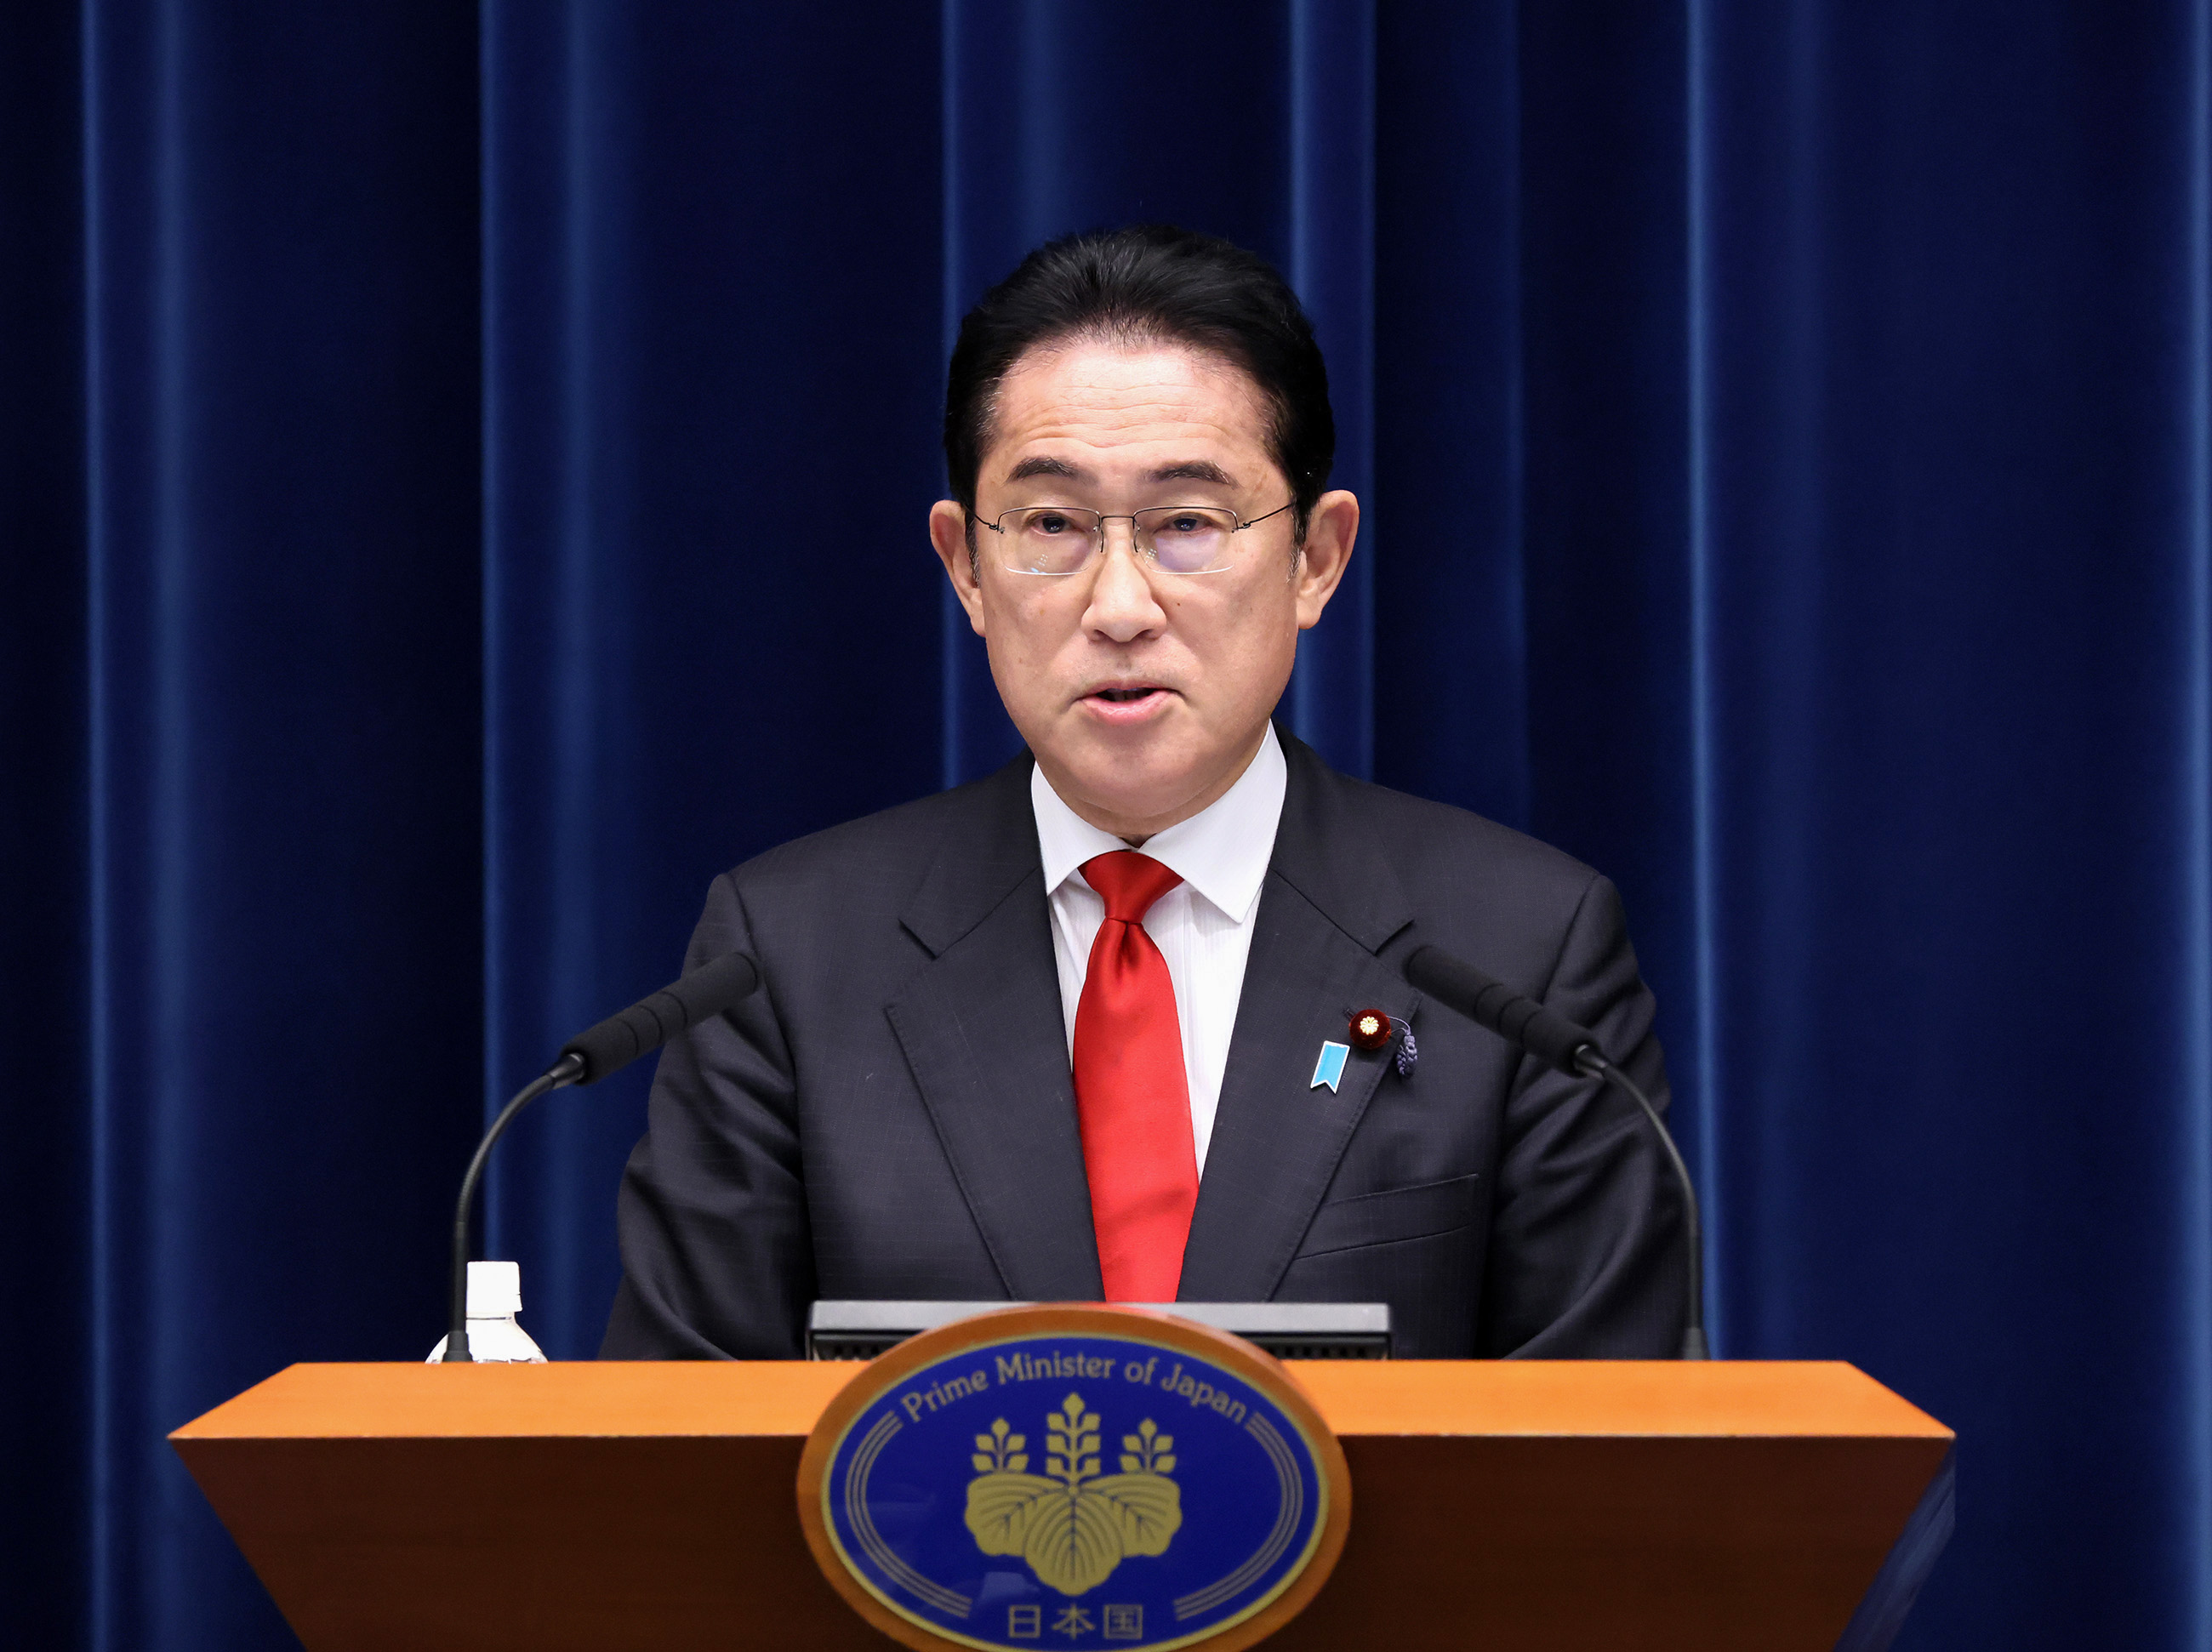 Press Conference by Prime Minster Kishida